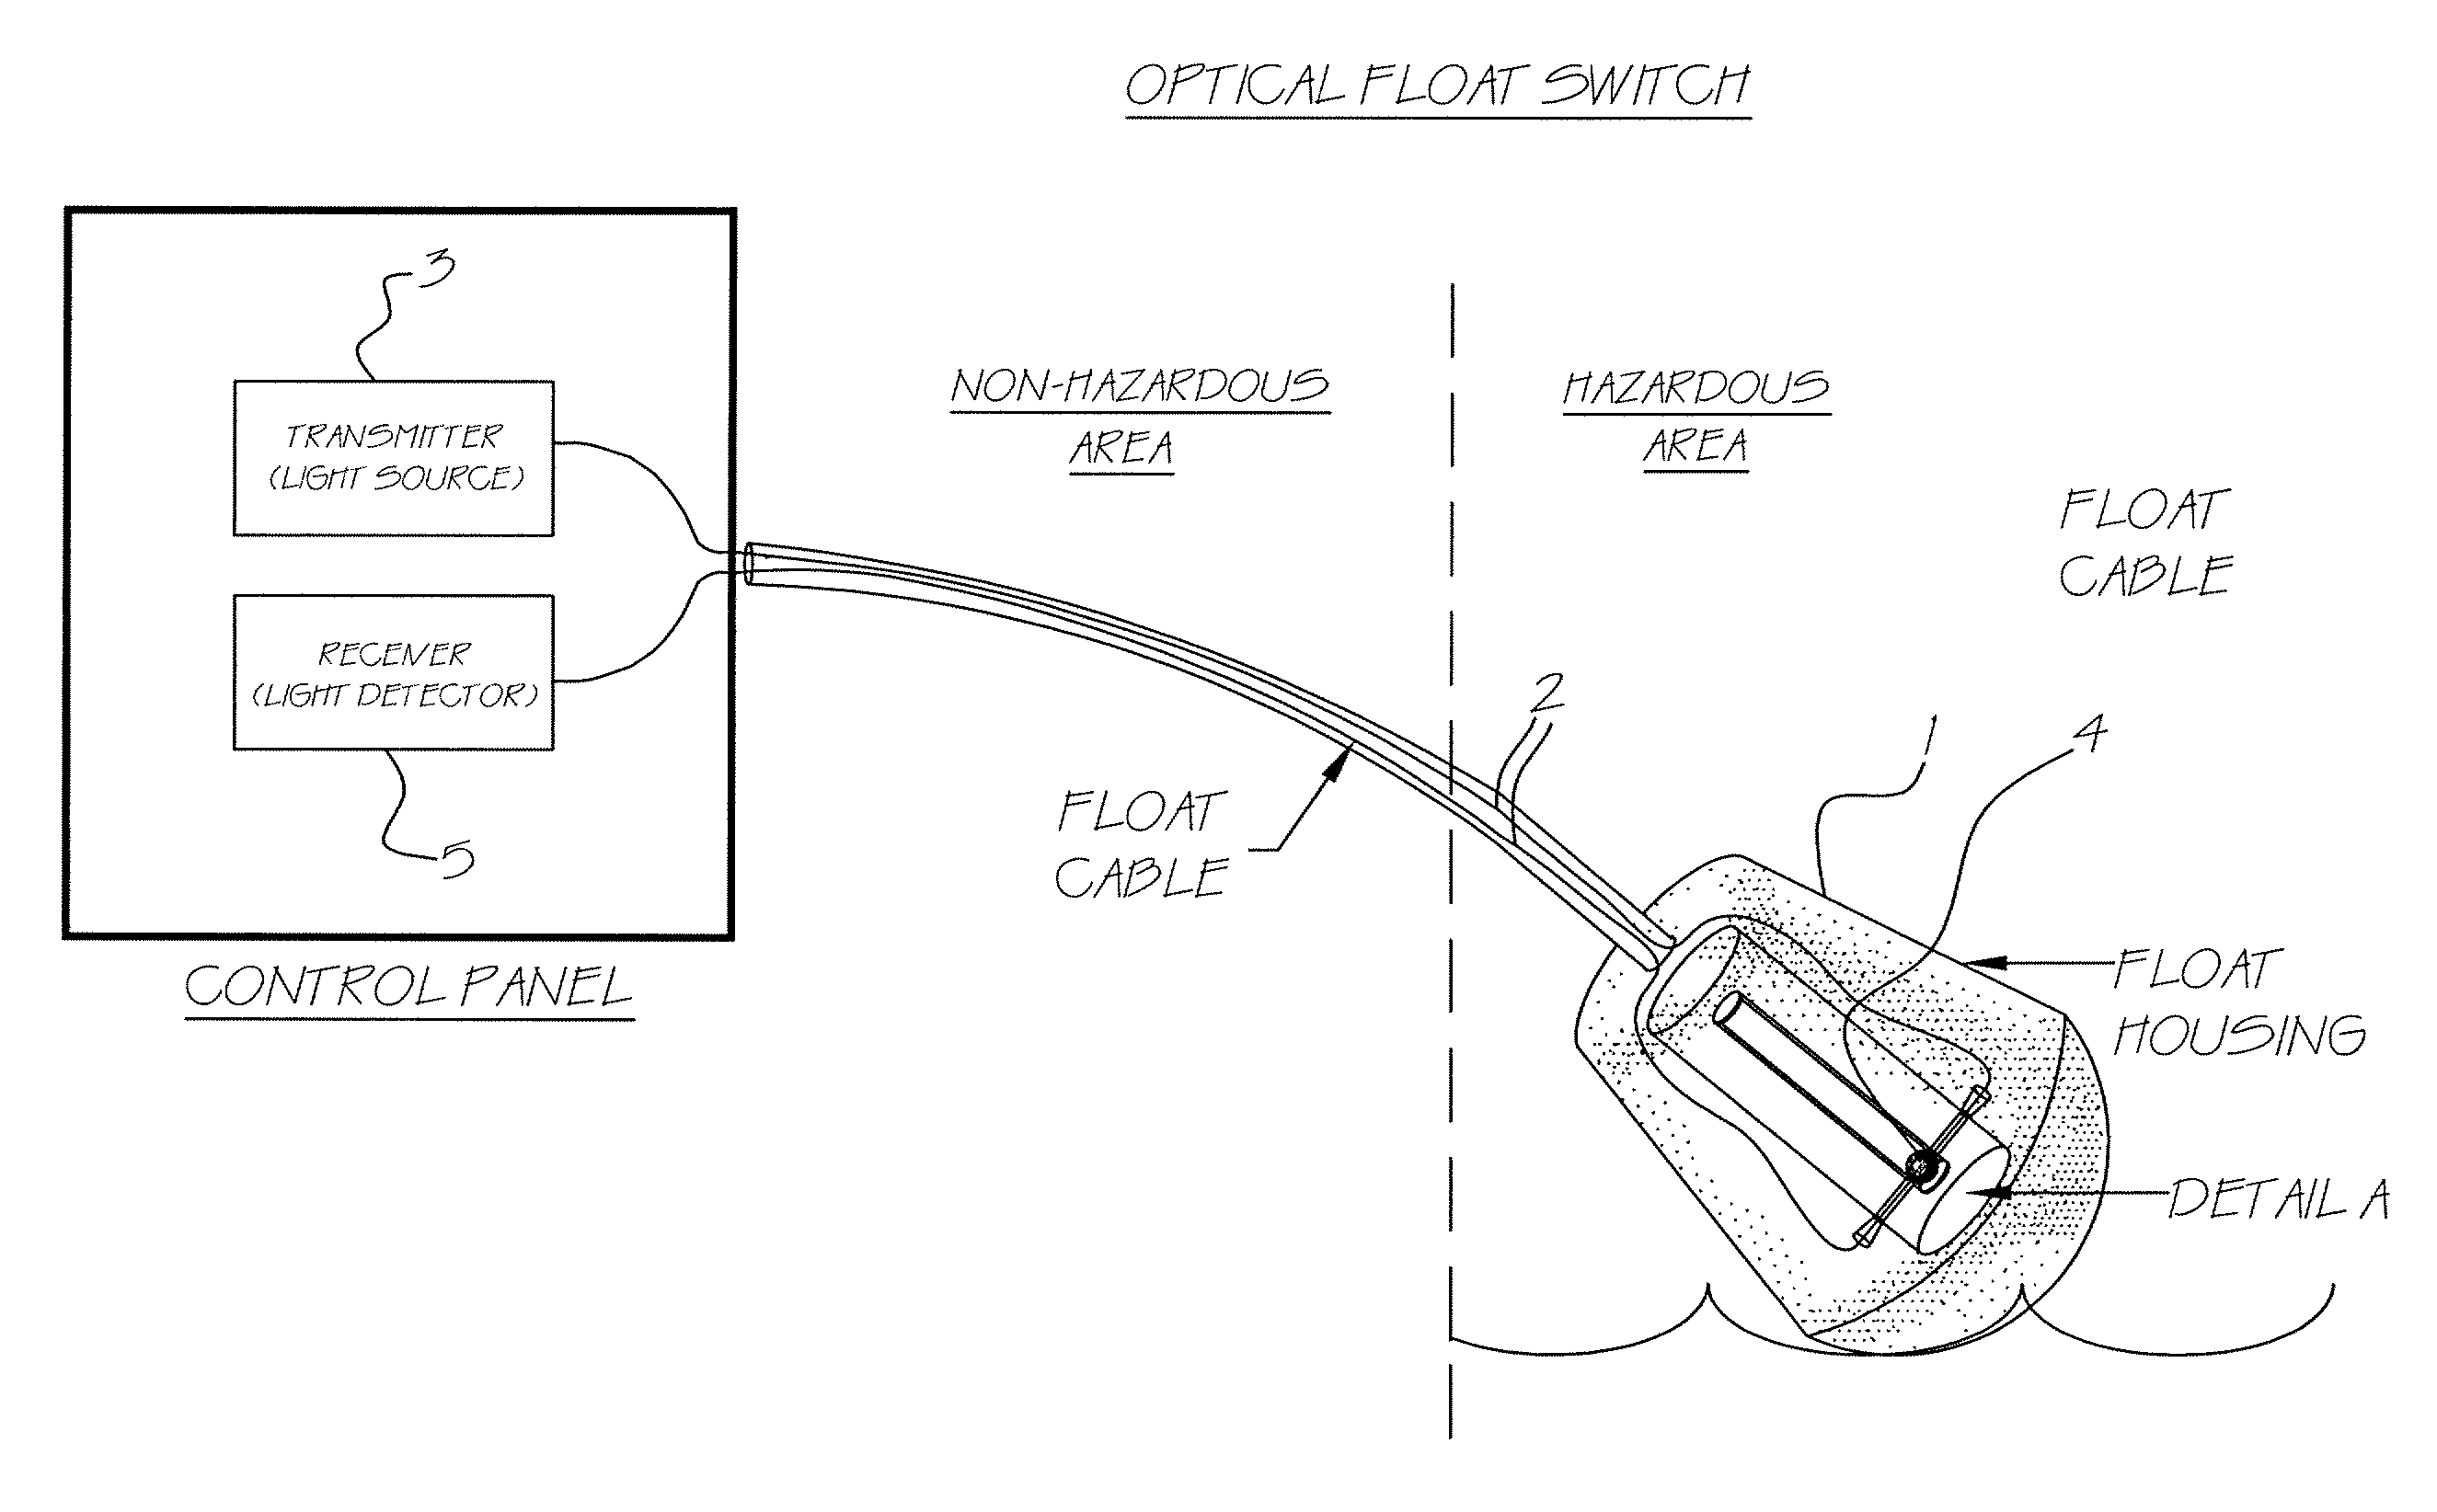 Optical switch